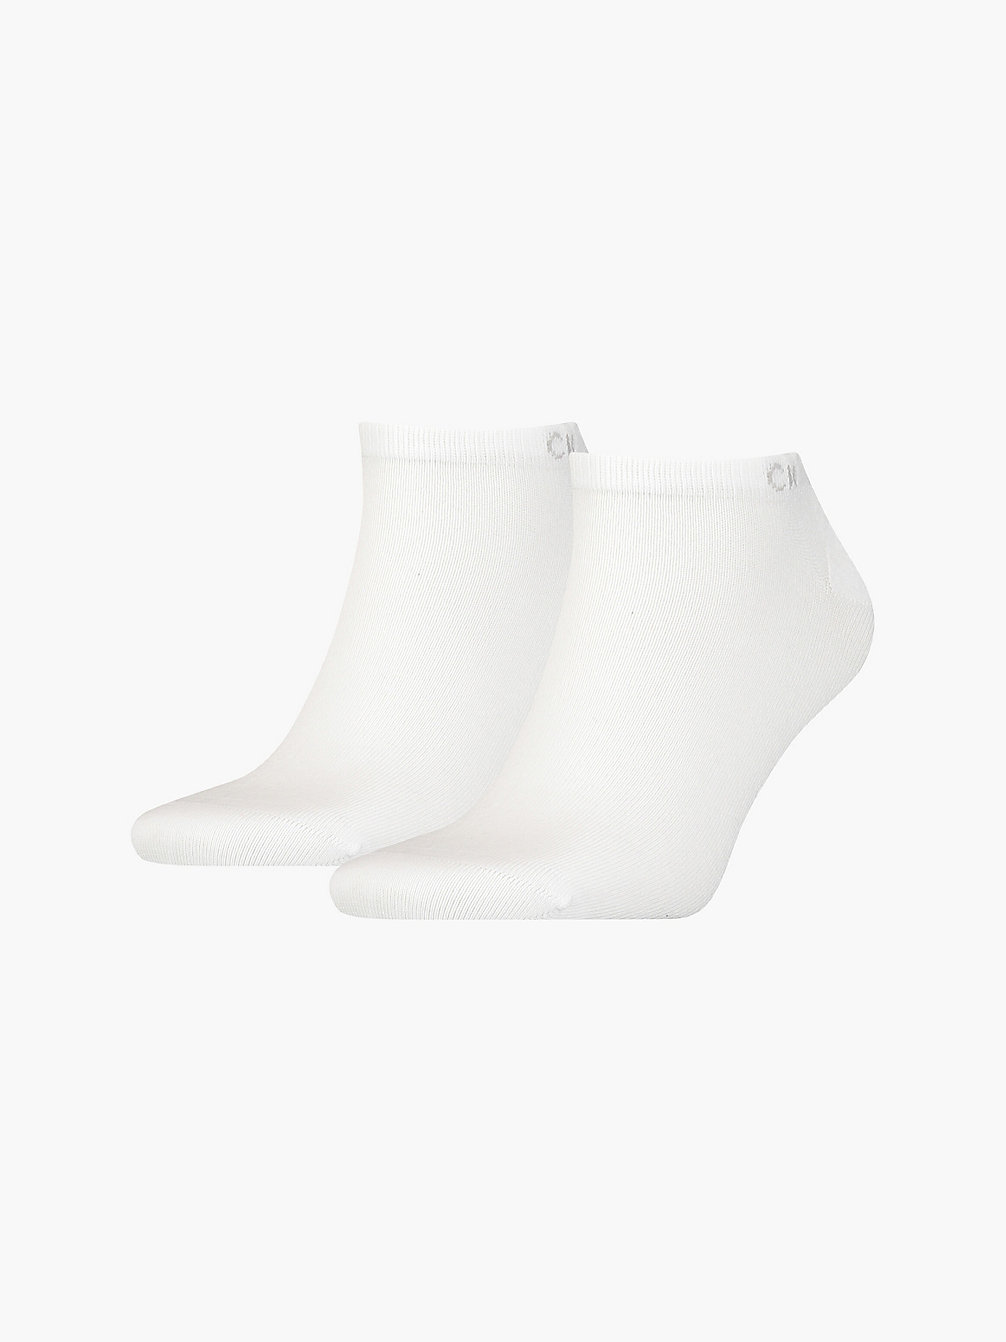 WHITE 2 Pack Invisible Socks undefined men Calvin Klein